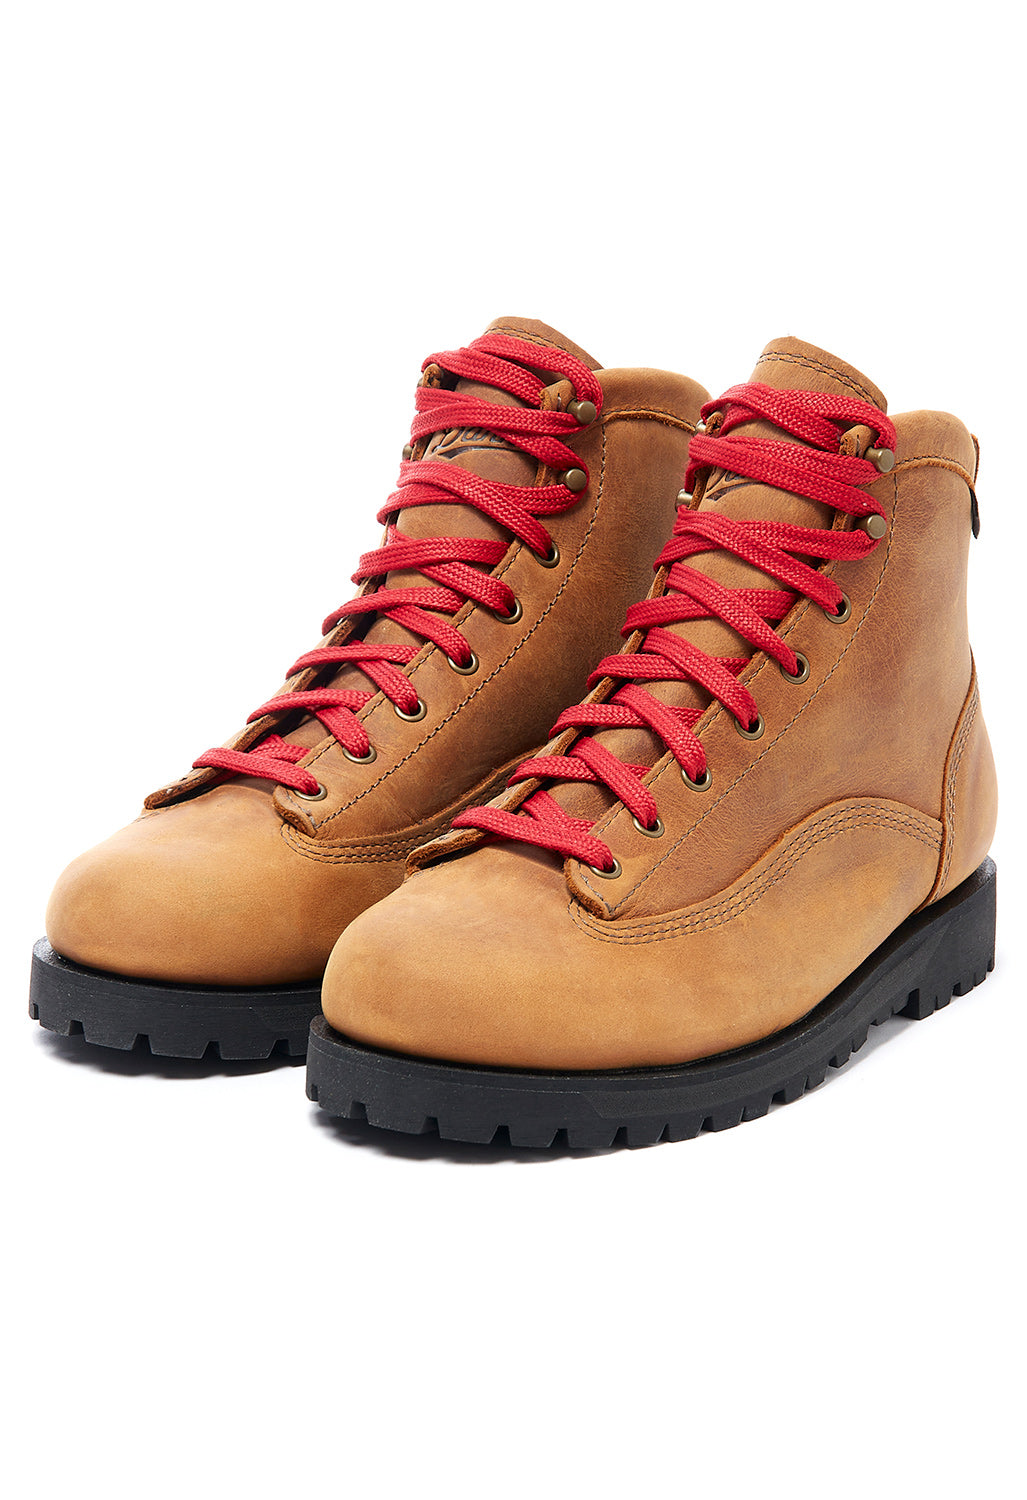 Danner Women's Cedar Grove Boots - Bone Brown GTX